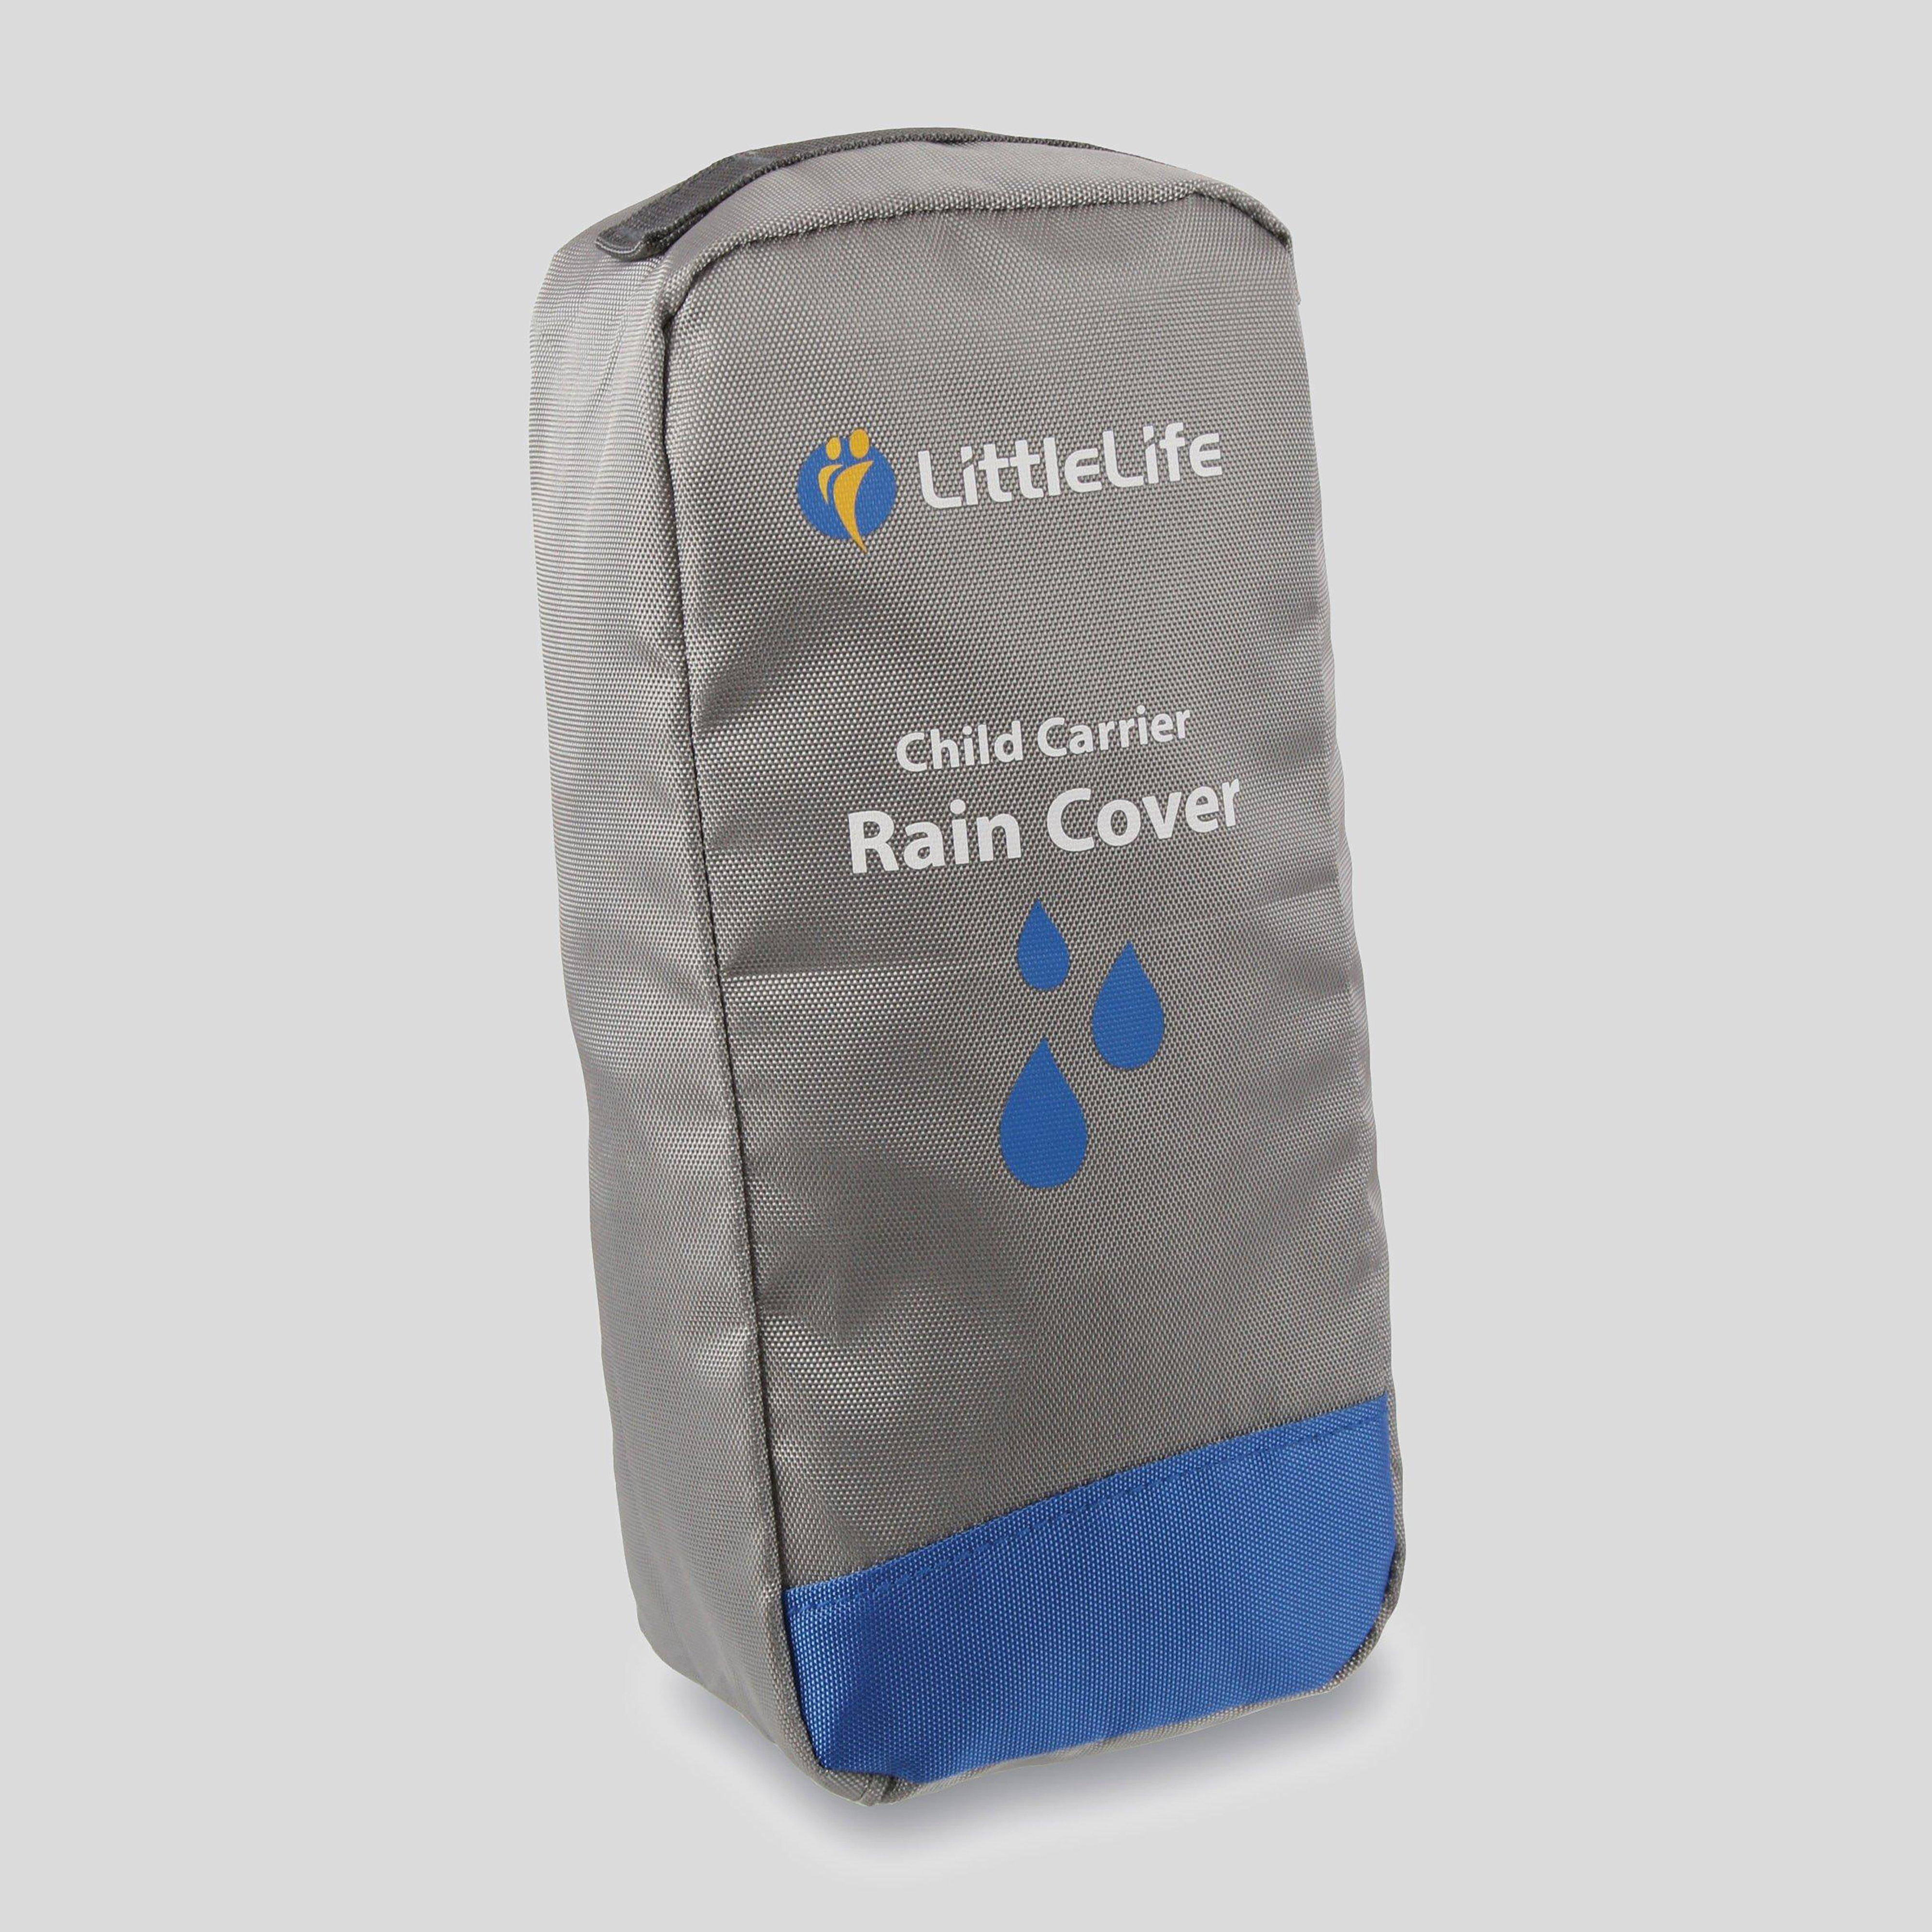  LITTLELIFE Child Carrier Rain Cover, Grey